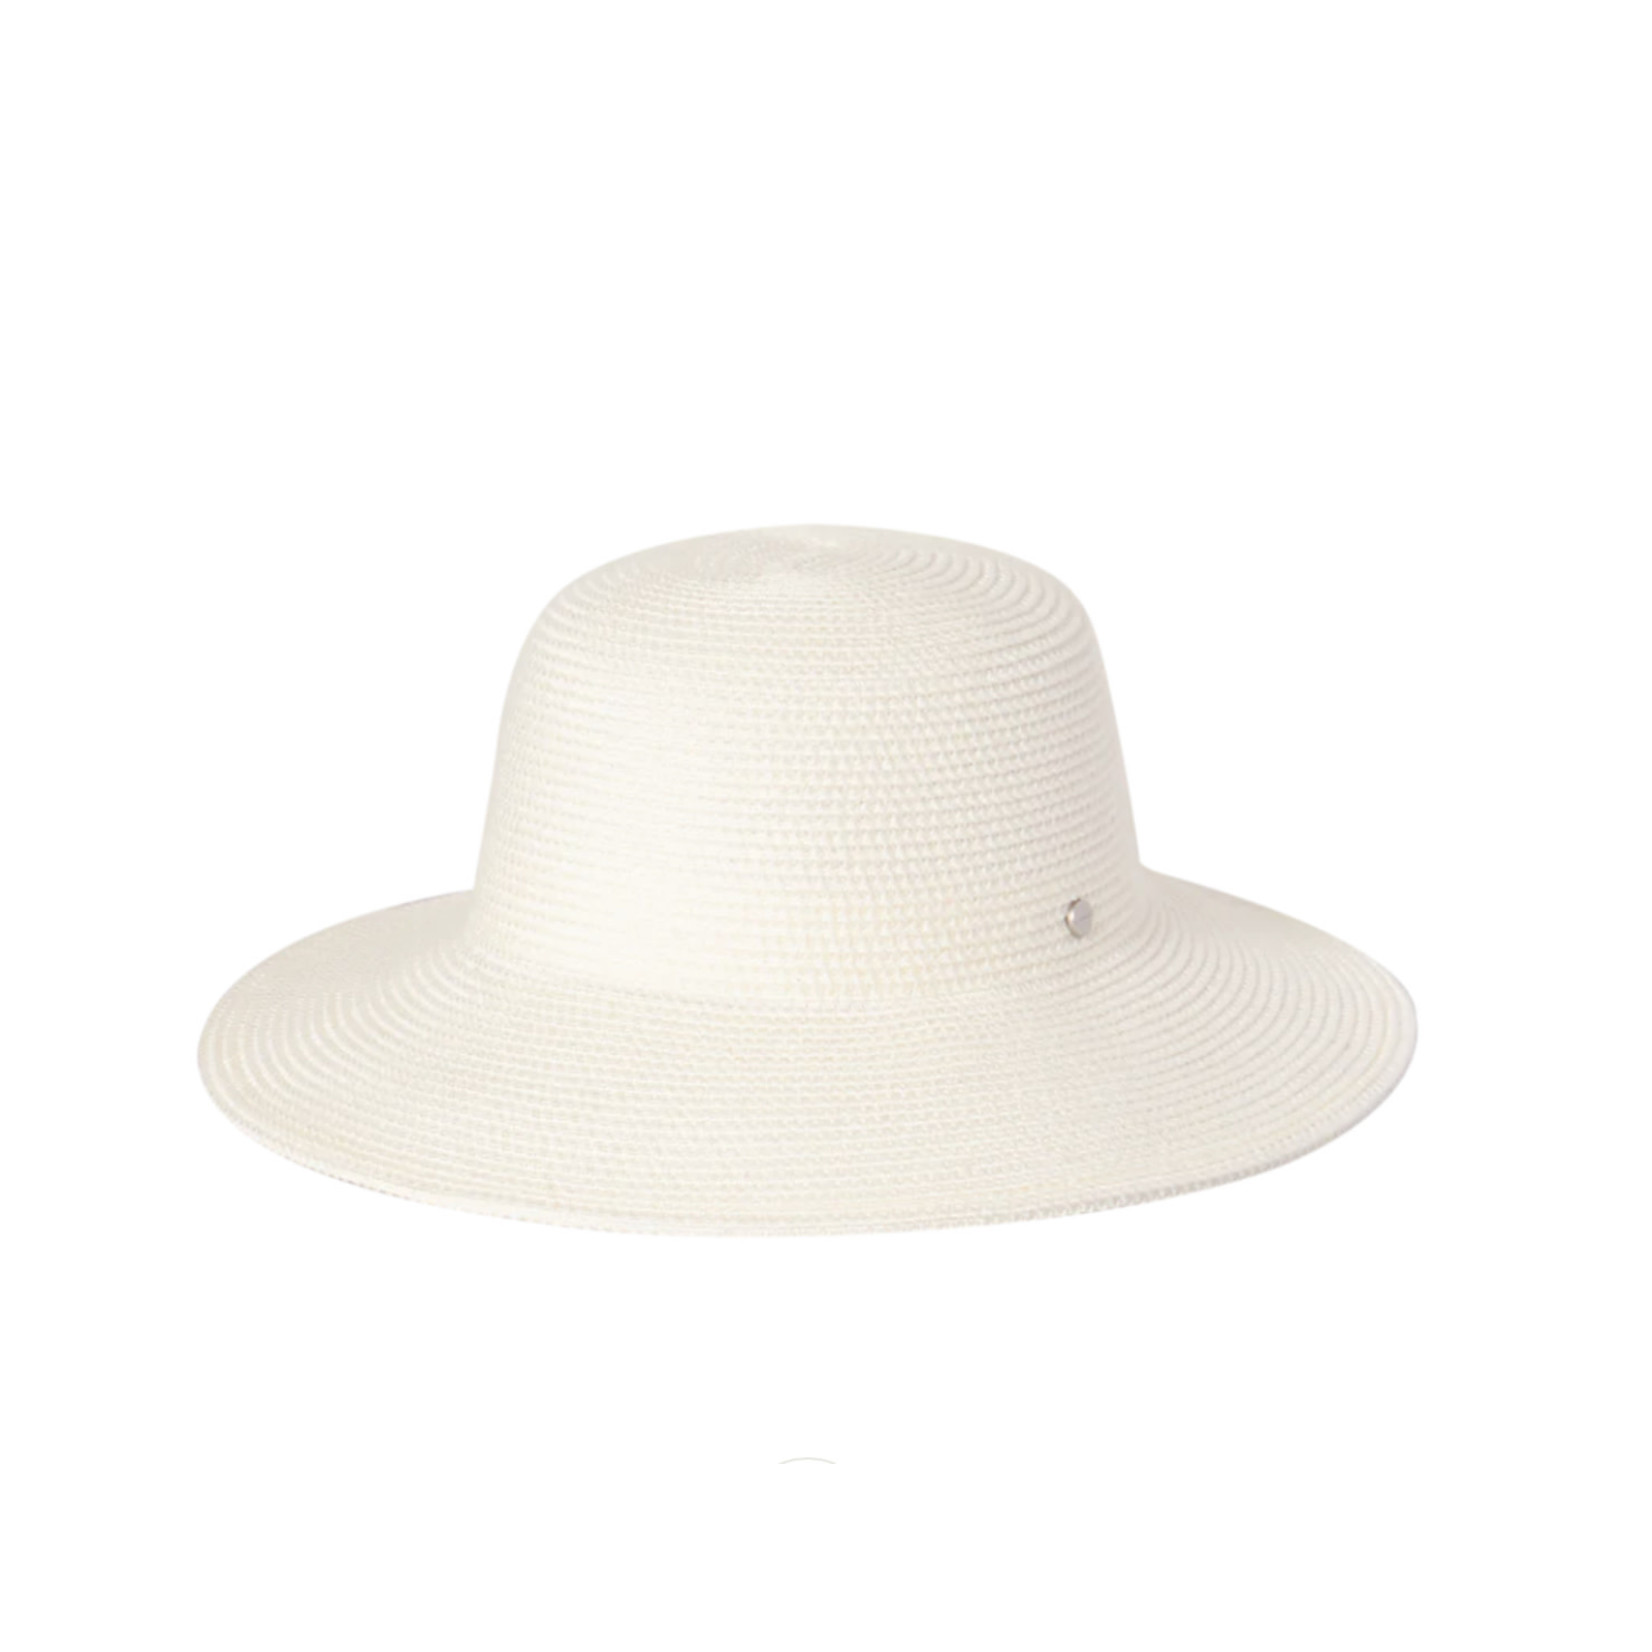 Kooringal Mira Mid Brim Hat in White